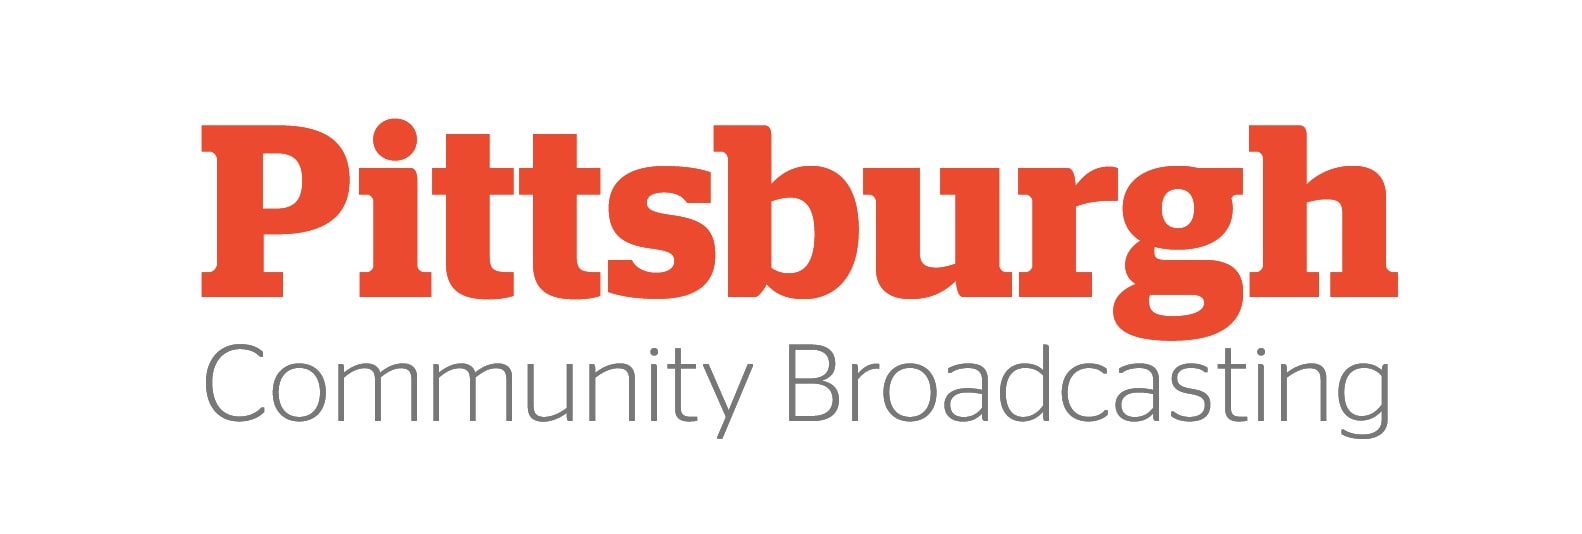 Pittsburgh Community Broadcasting logo